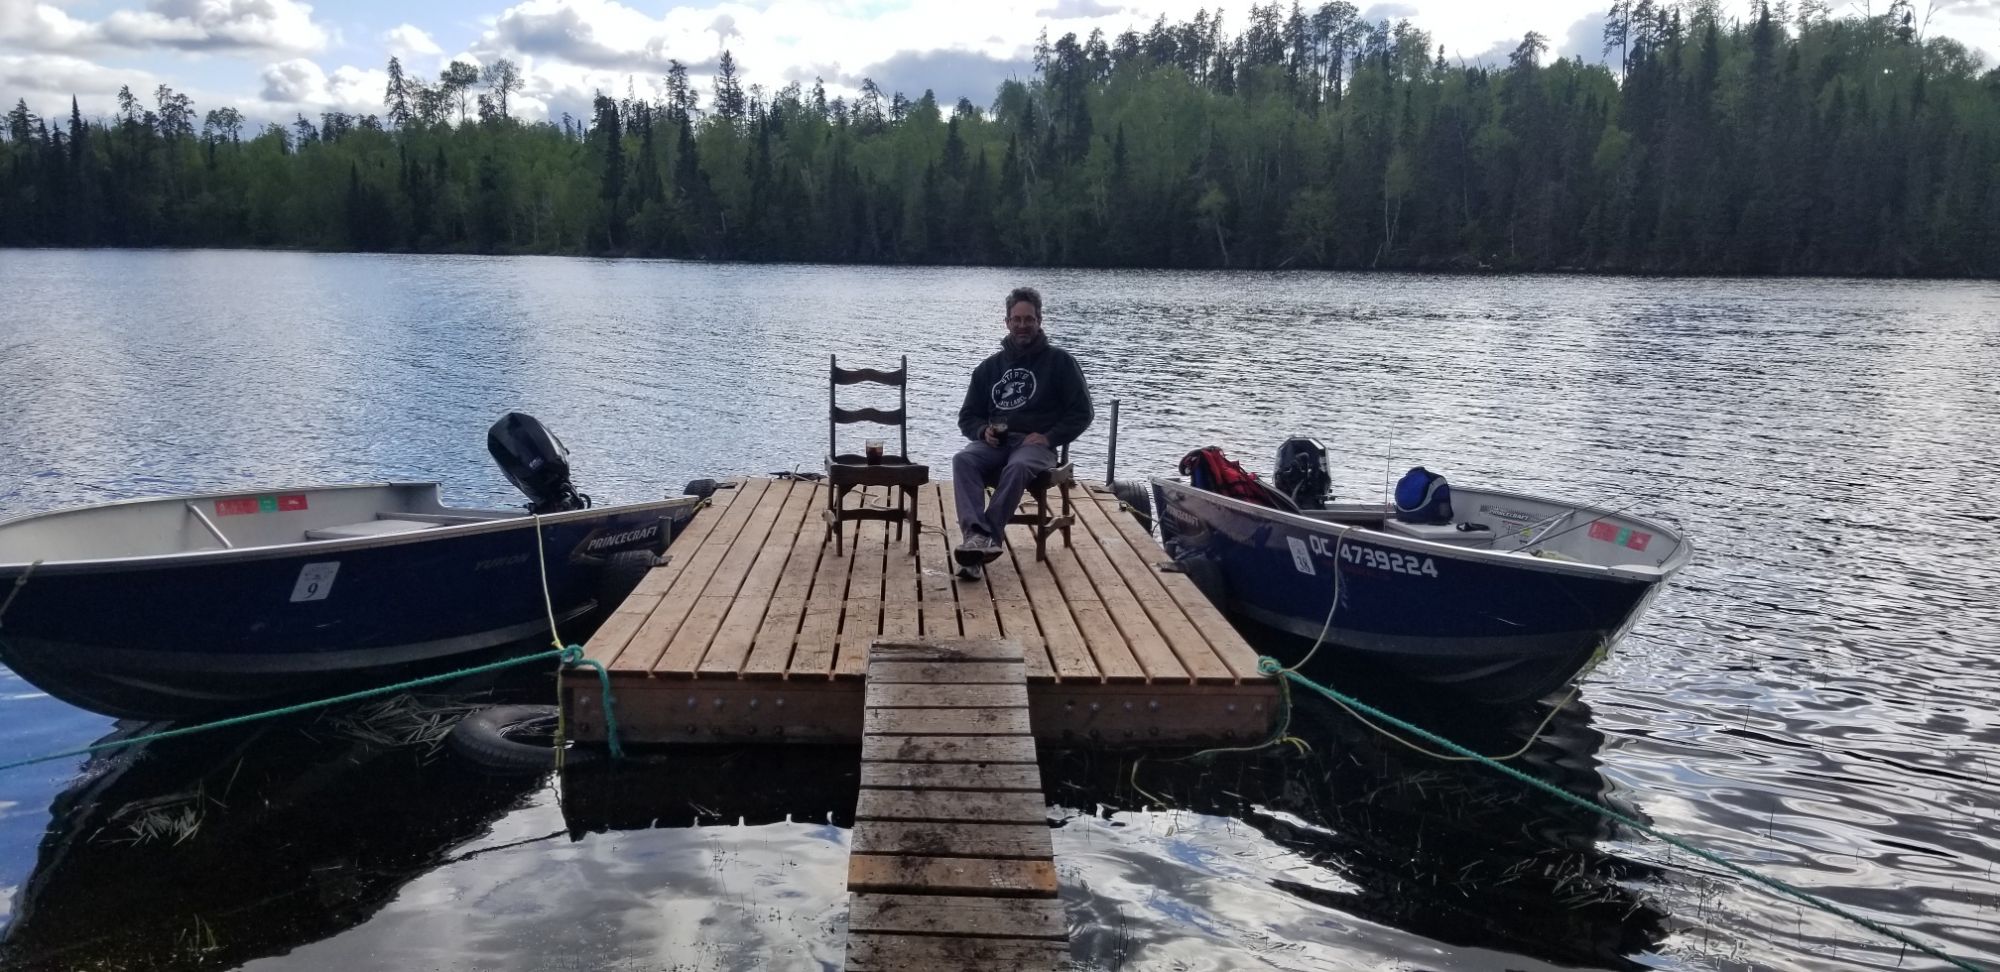 Good break between fishing sessions